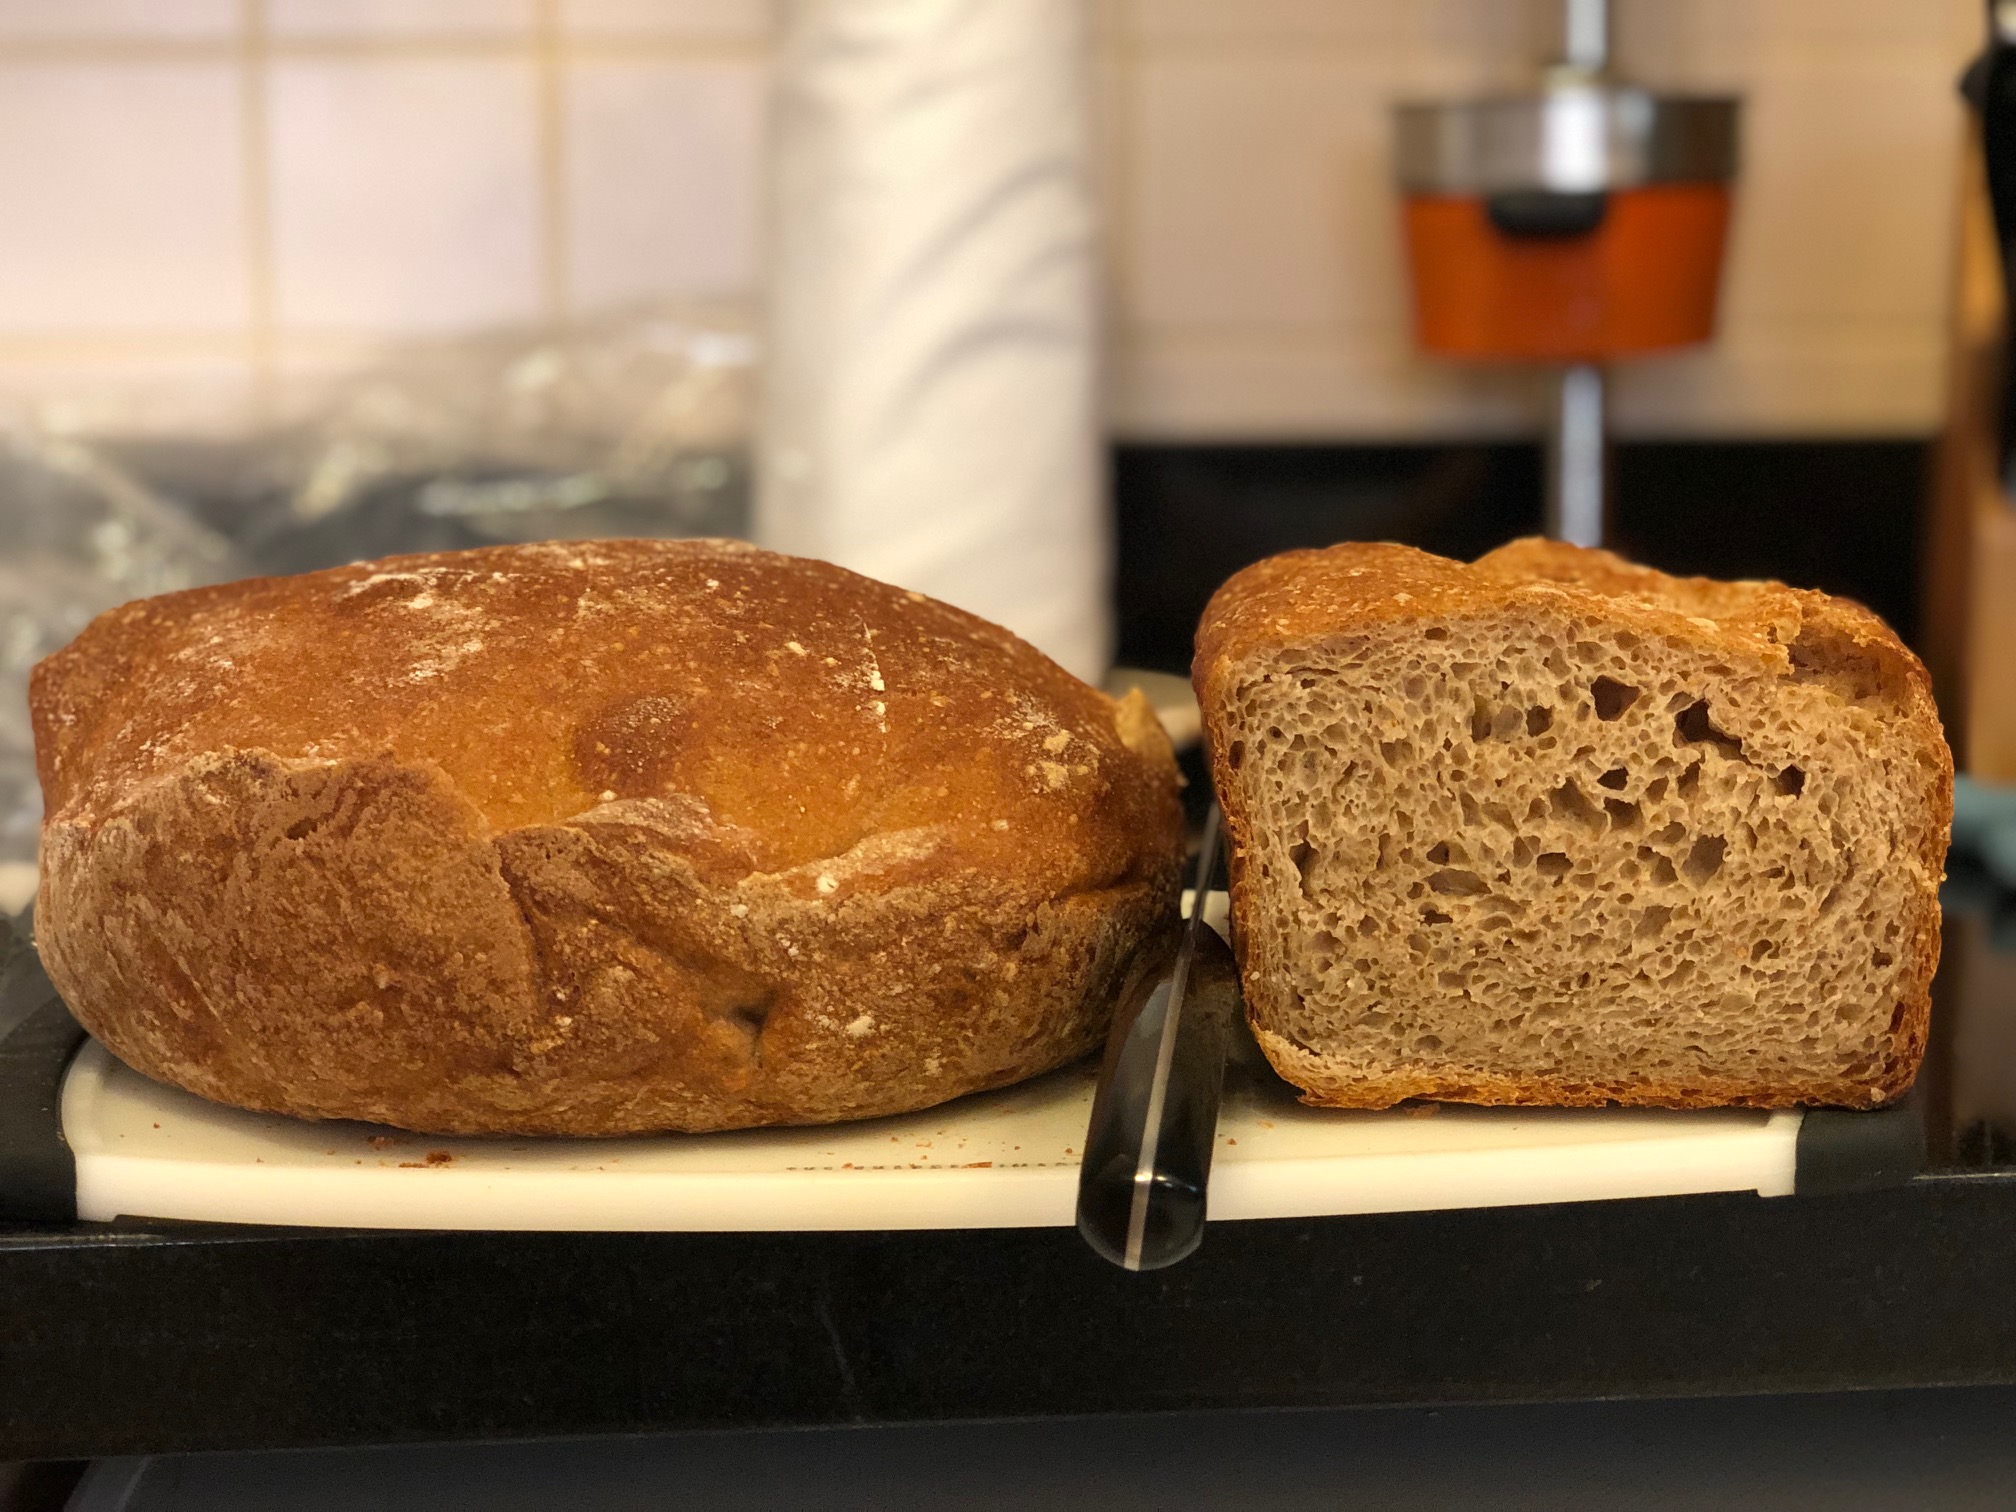 The dutch oven loaf rose better.  Denser crumb on the bottom. 